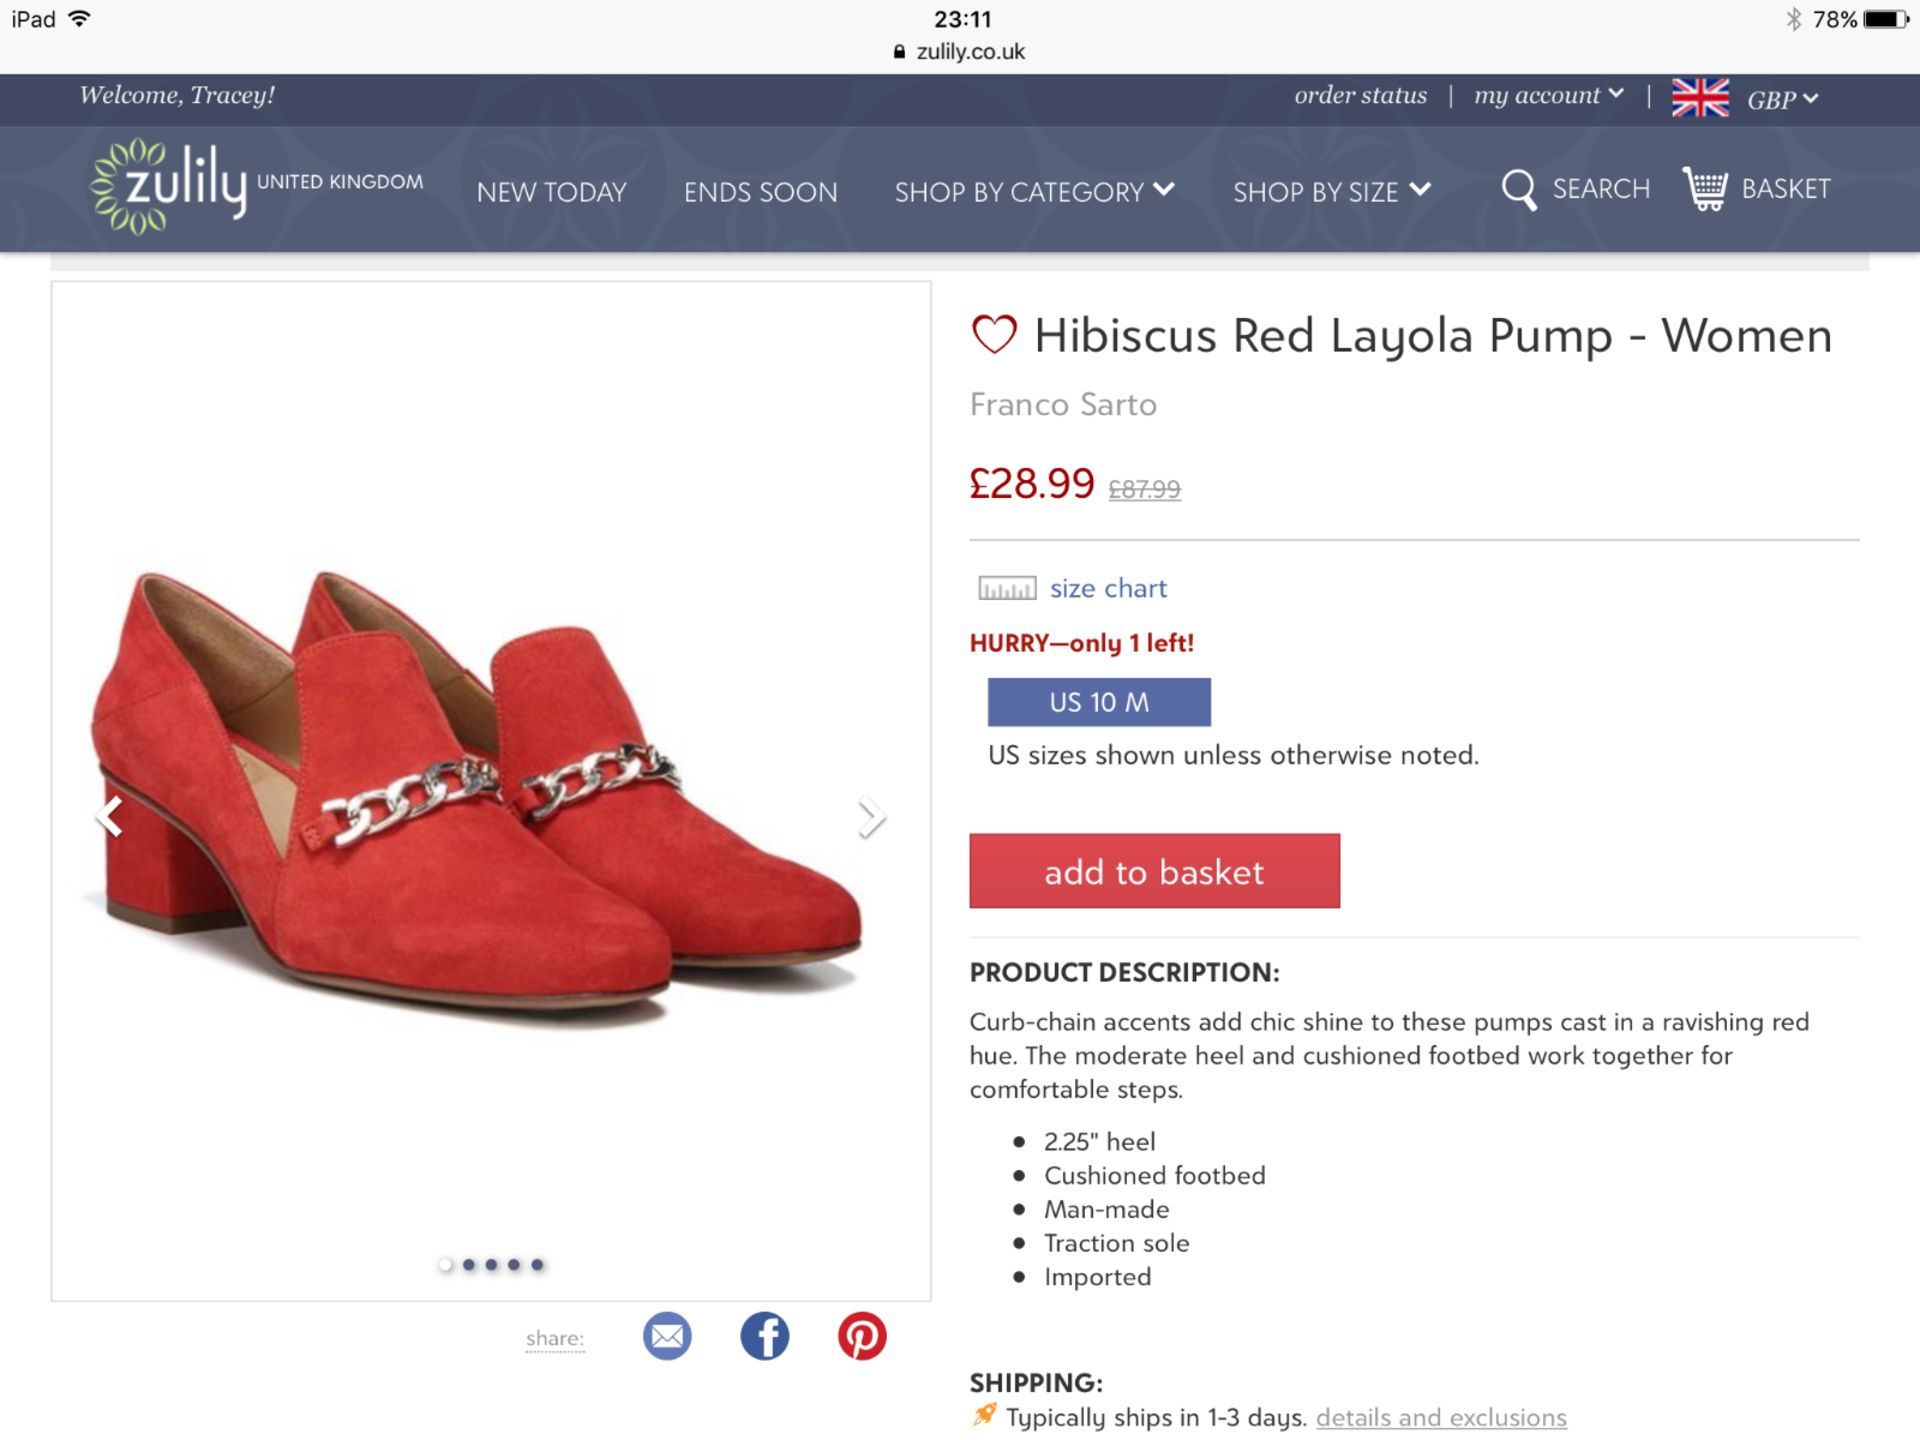 Franco Sarto Hibiscus Red Layola Shoe, Size Uk 5.5-6 (New With Box) [Ref: 55491910 I004] - Image 6 of 6